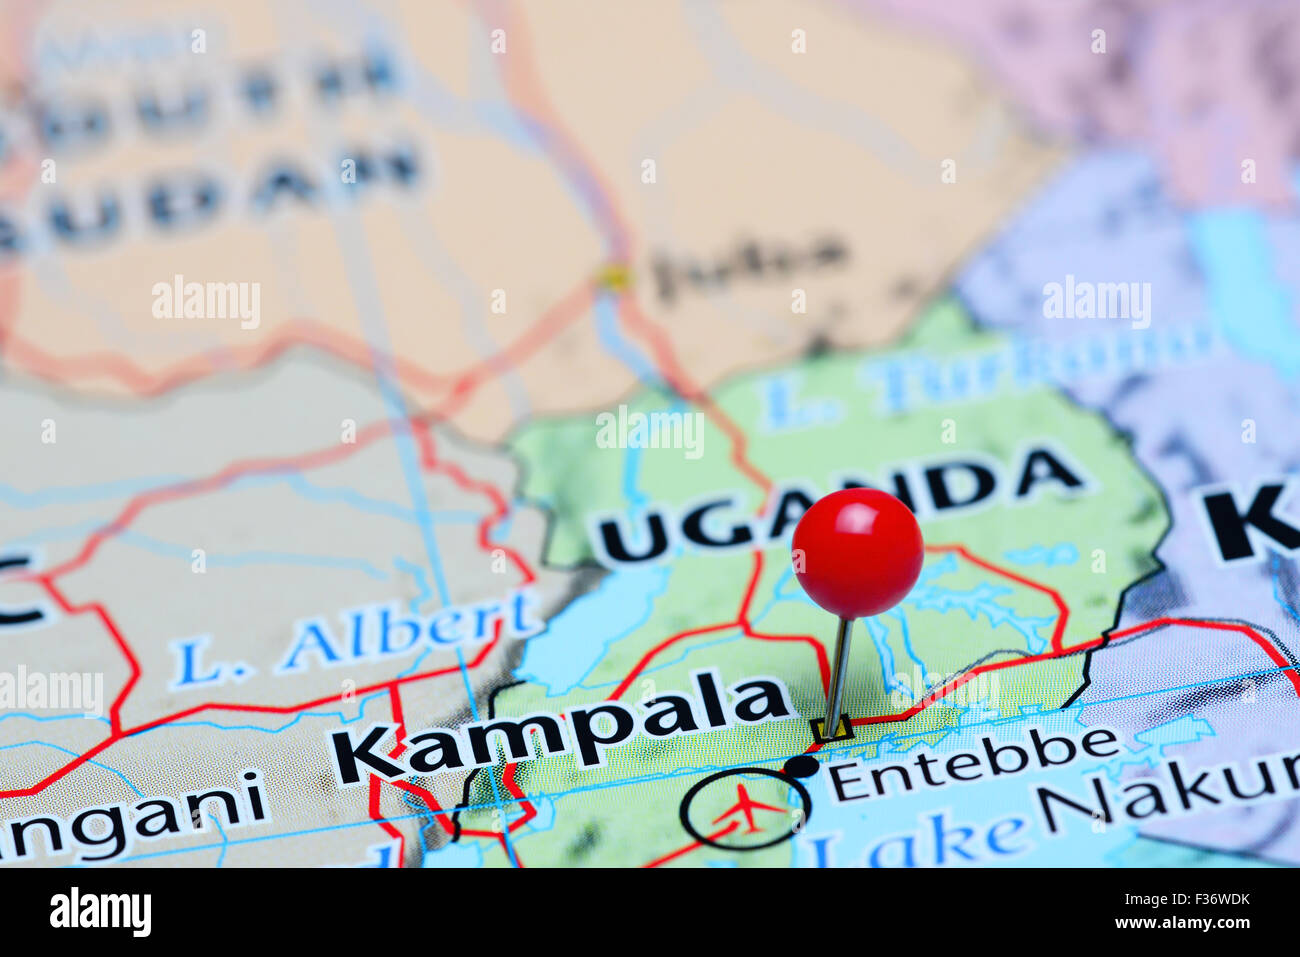 Kampala pinned on a map of Asia Stock Photo